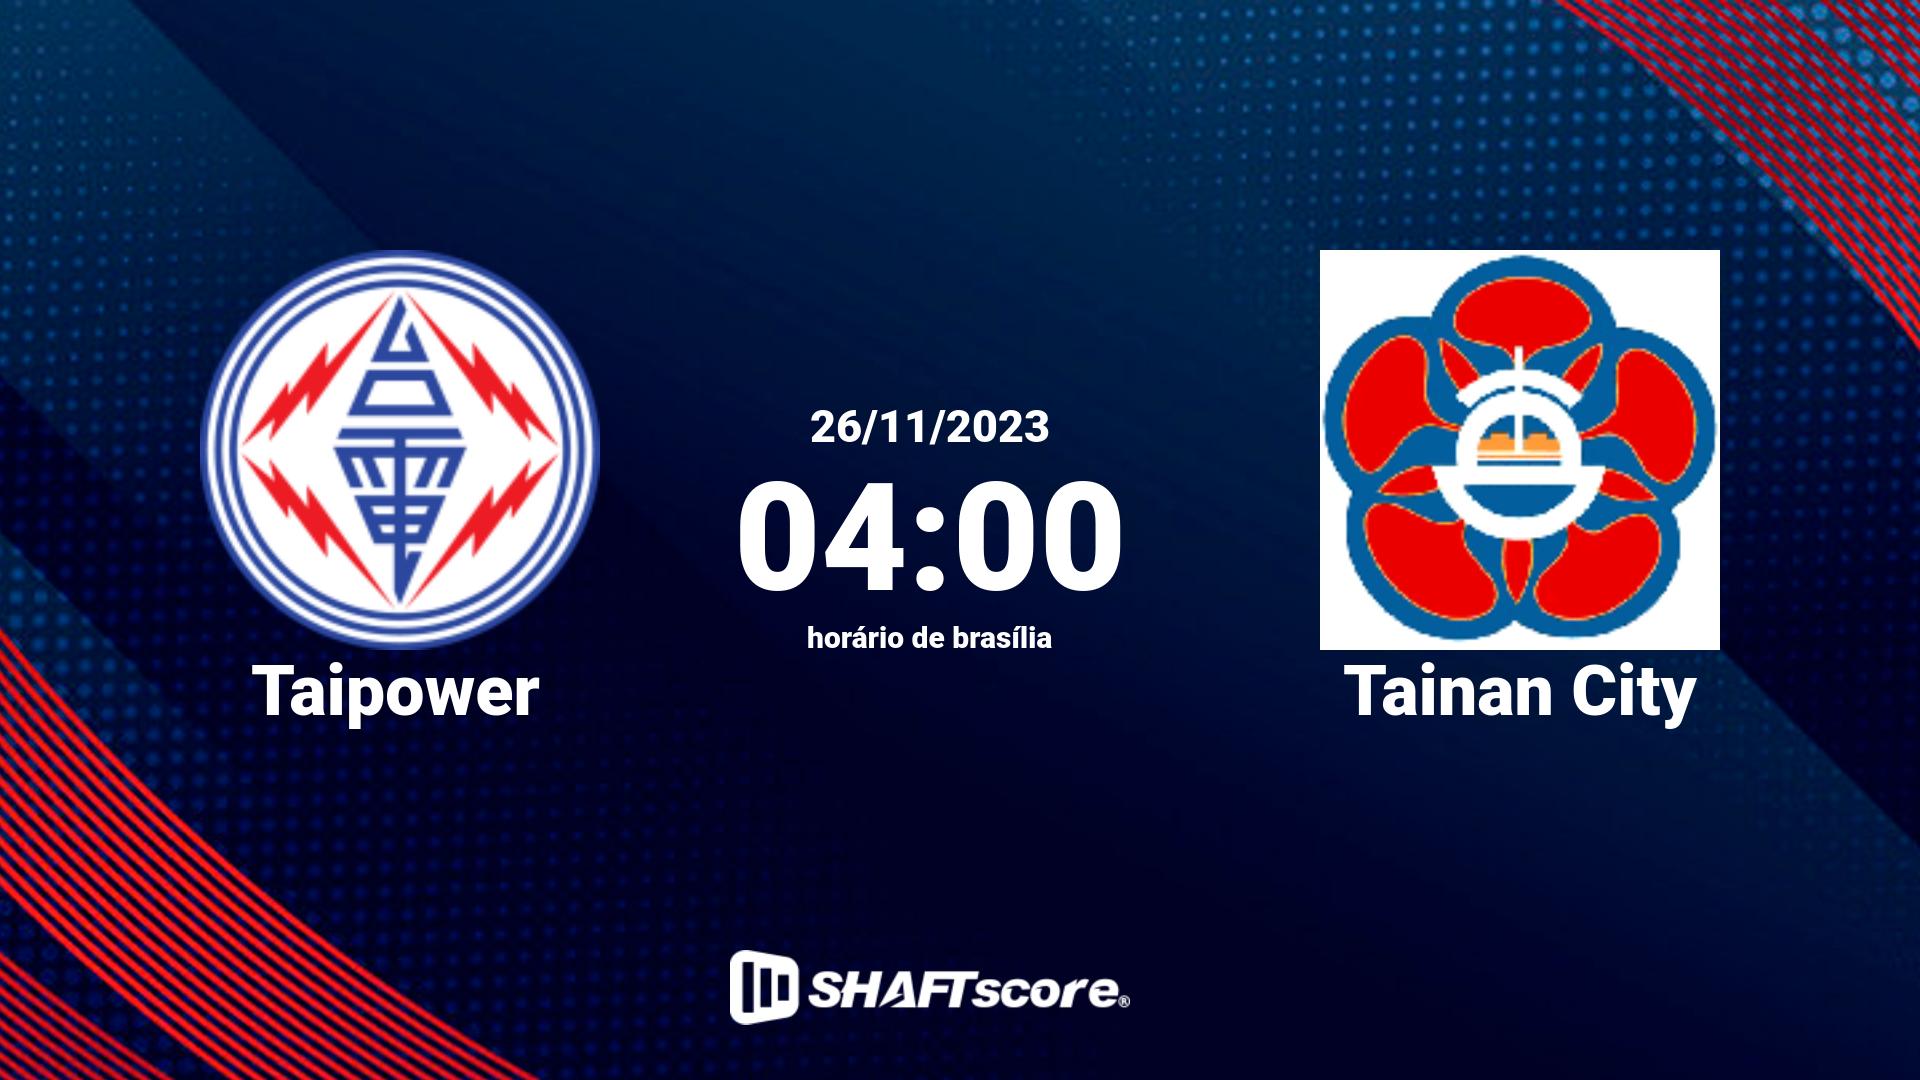 Estatísticas do jogo Taipower vs Tainan City 26.11 04:00